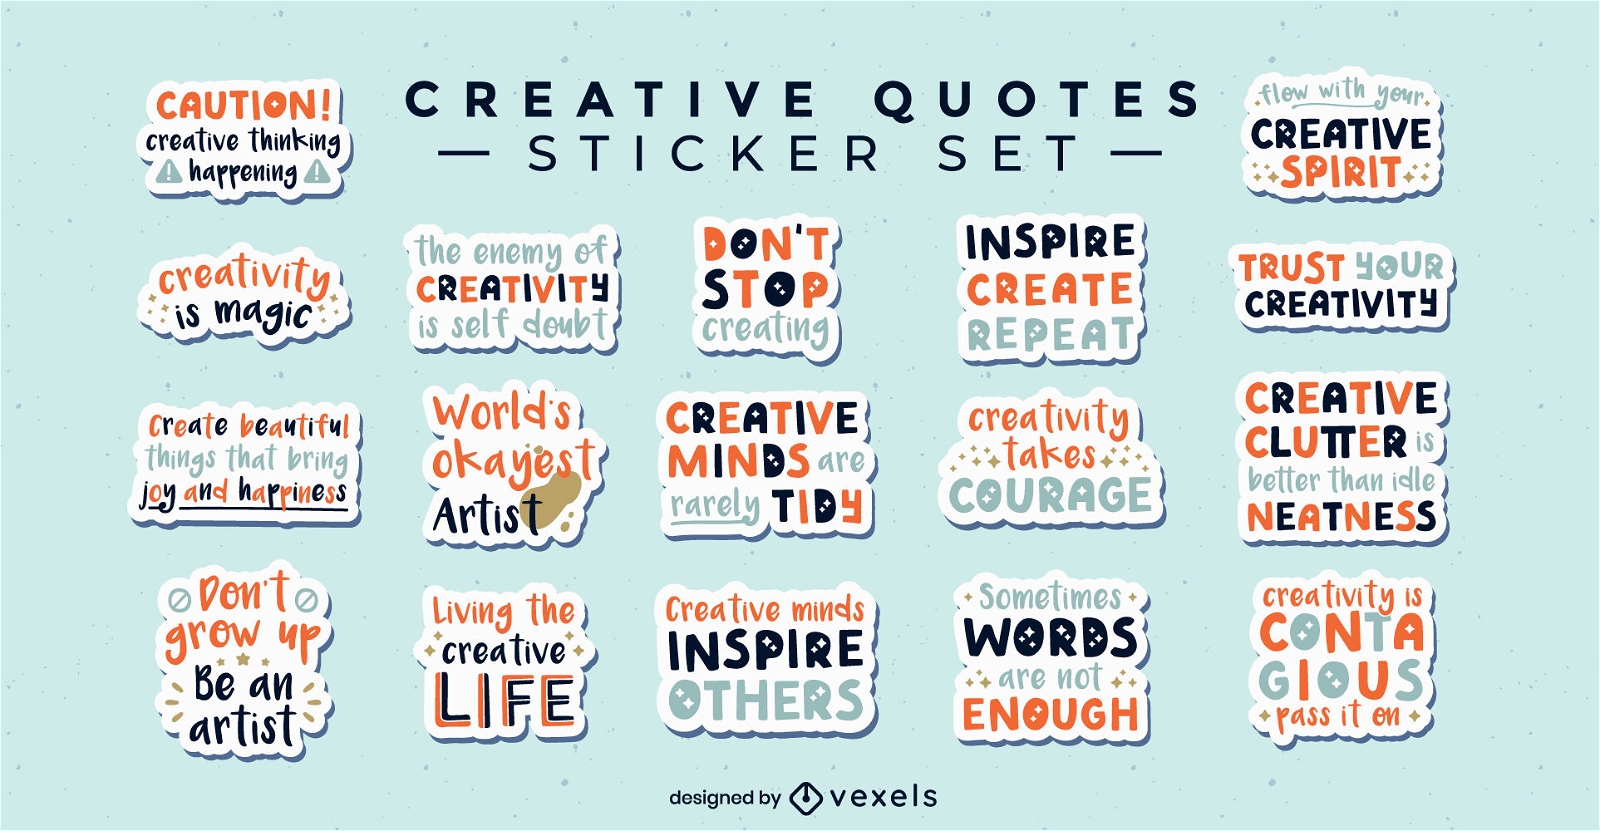 Creative quotes stickers set